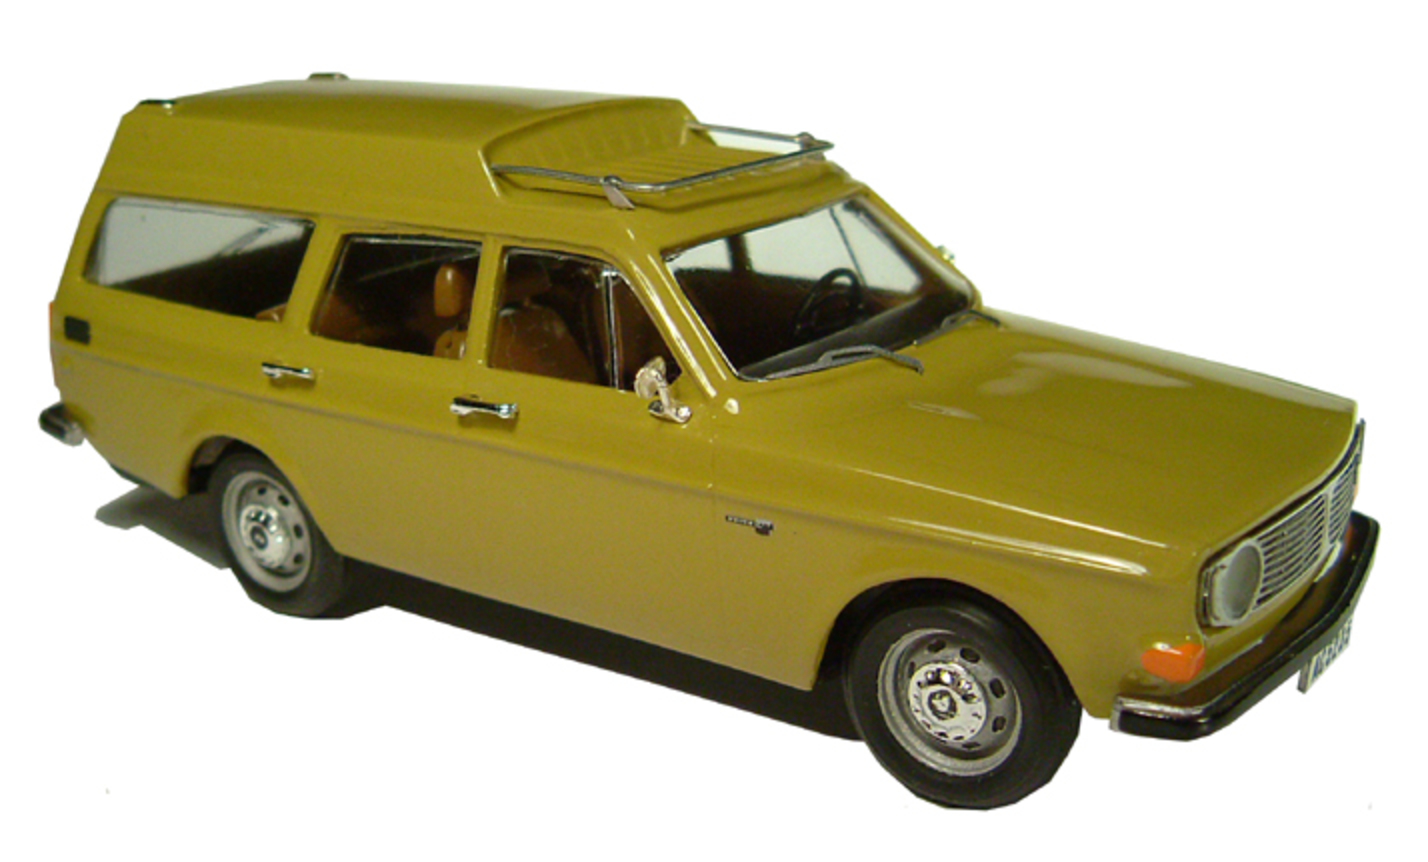 Volvo 145 Express standard. 1971 - California-vit (42)